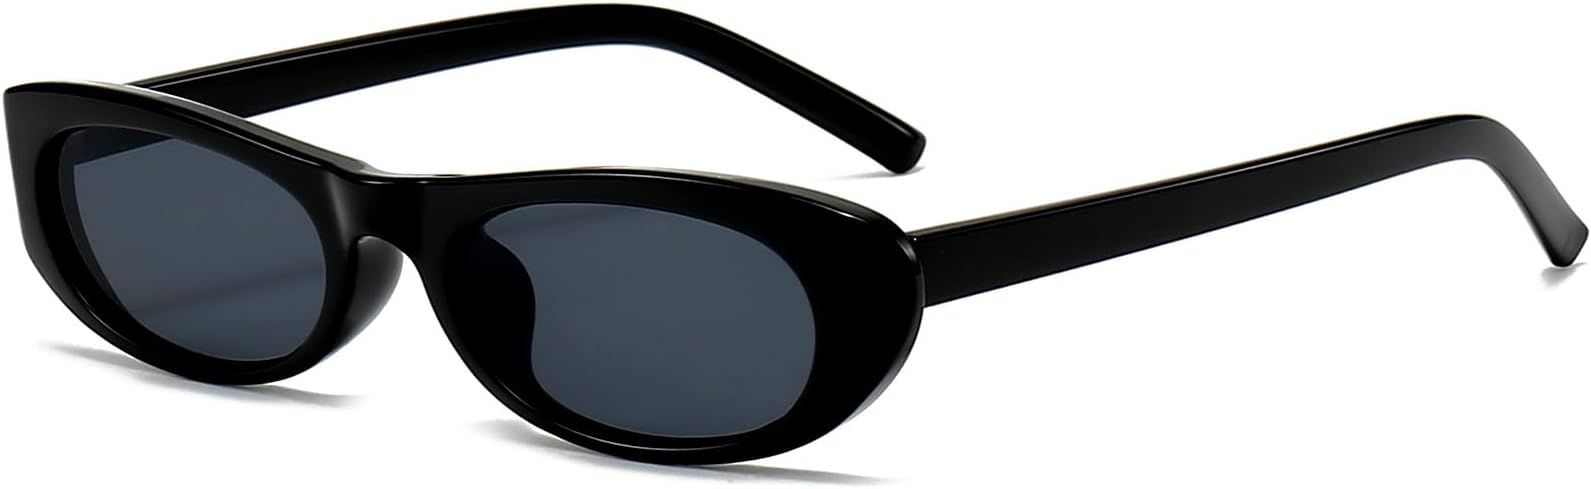 EYLRIM Trend Narrow Cat Eye Sunglasses for Women Fashion Small Oval Sun Glasses Black Shades | Amazon (US)